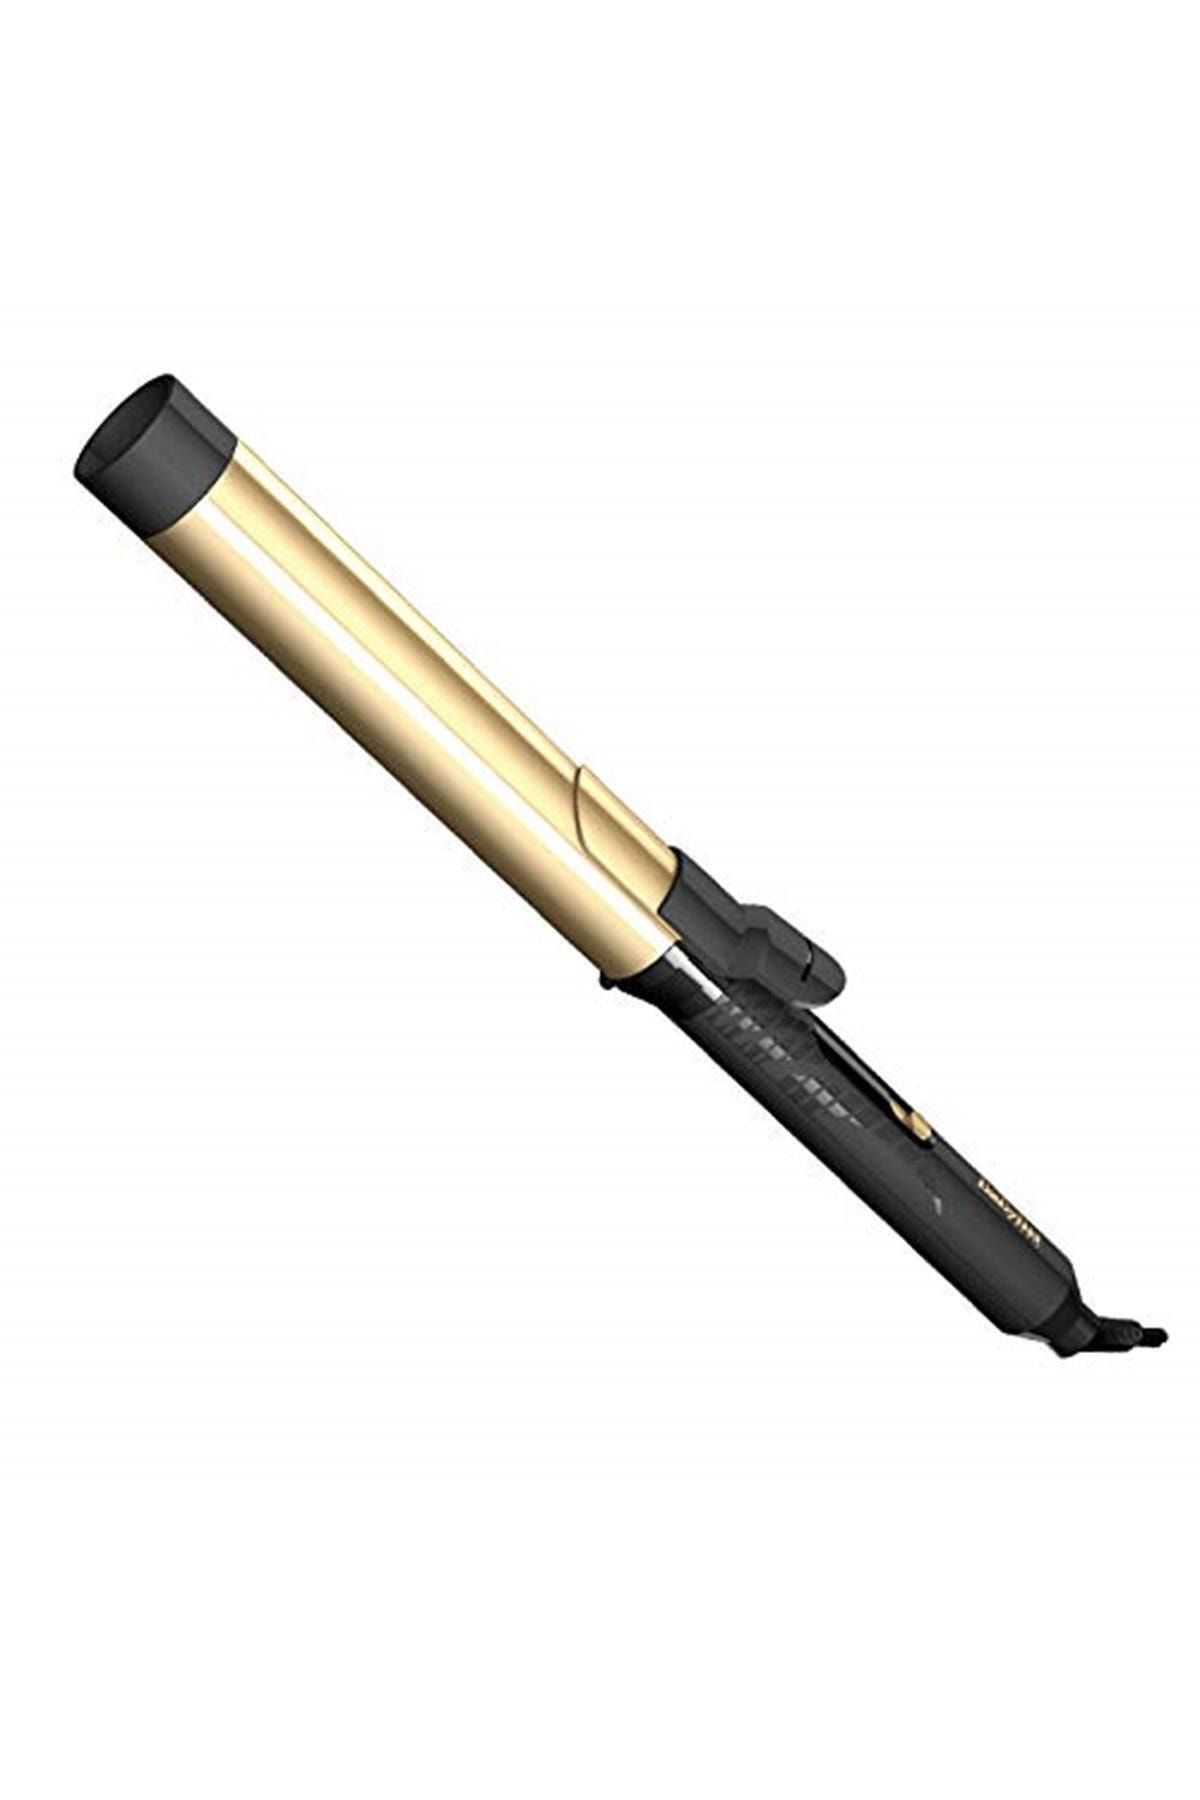 BABYLİSS Marka: C432e Gold Ceramic 200c Led Ekran Saç Maşası, 32mm Kategori: Saç Maşası